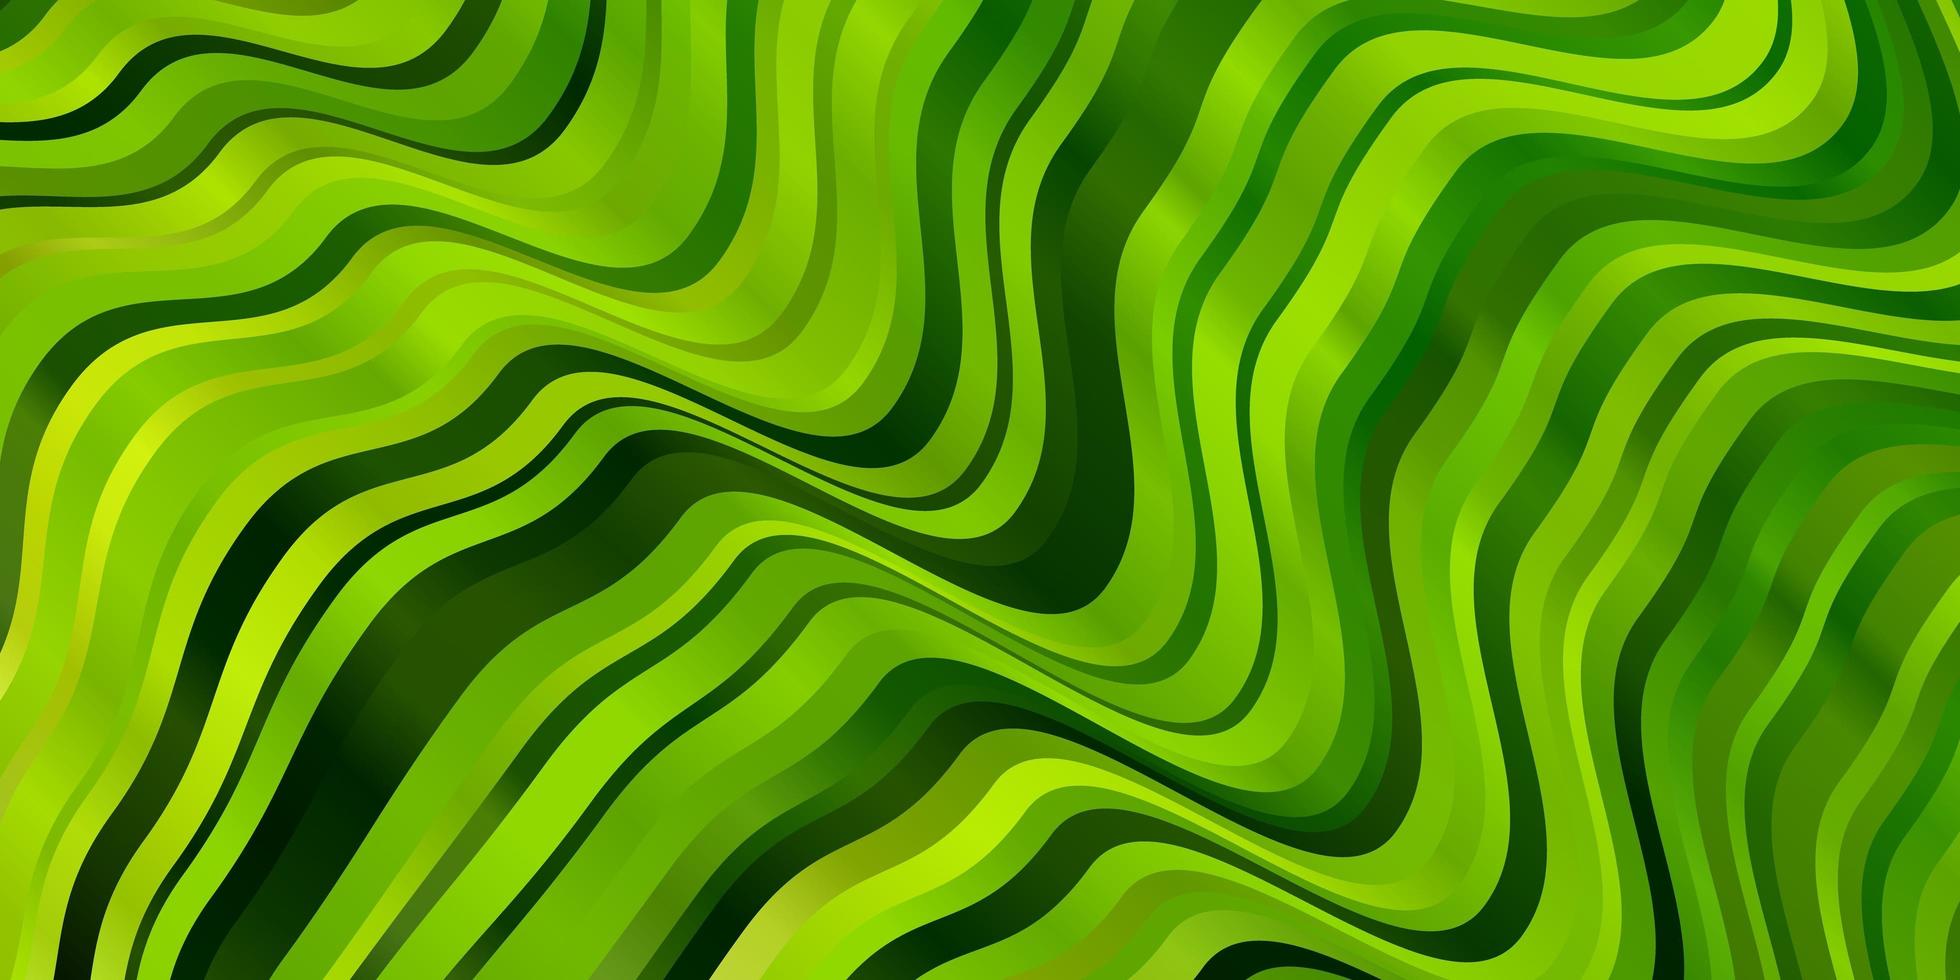 ljusgrön, gul vektorbakgrund med sneda linjer. vektor